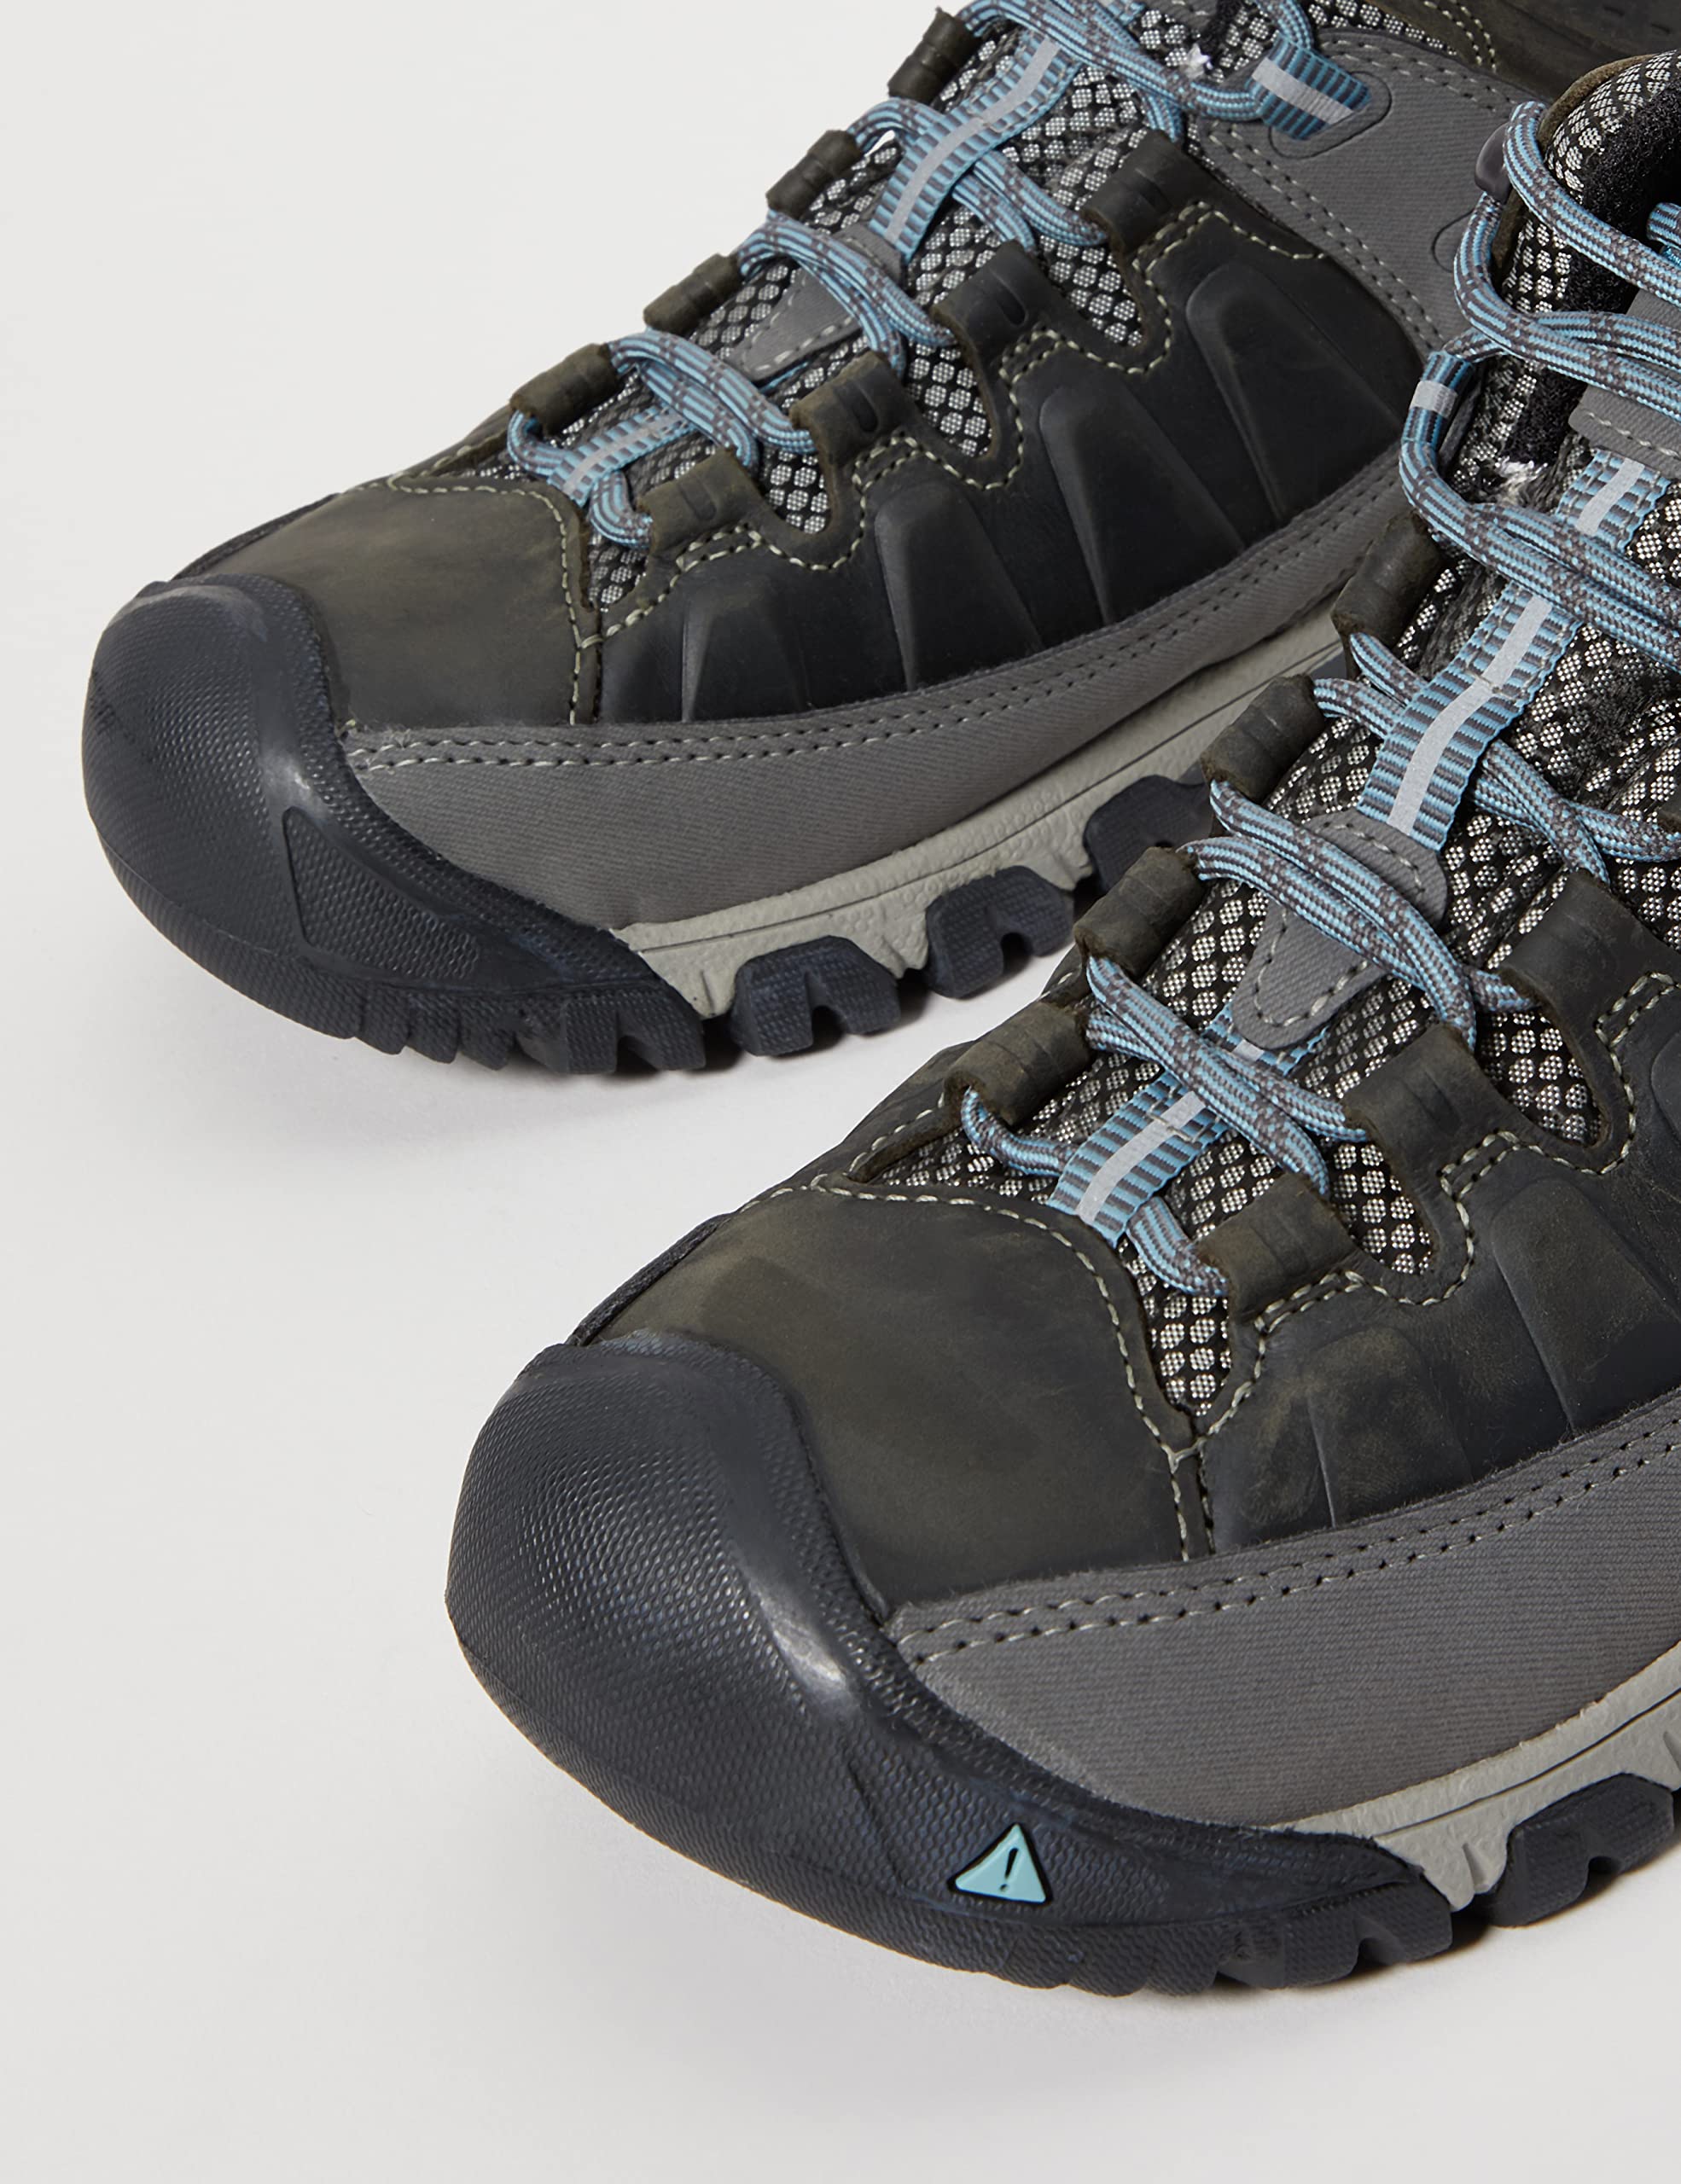 KEEN Women's Targhee 3 Mid Height Waterproof Hiking Boots